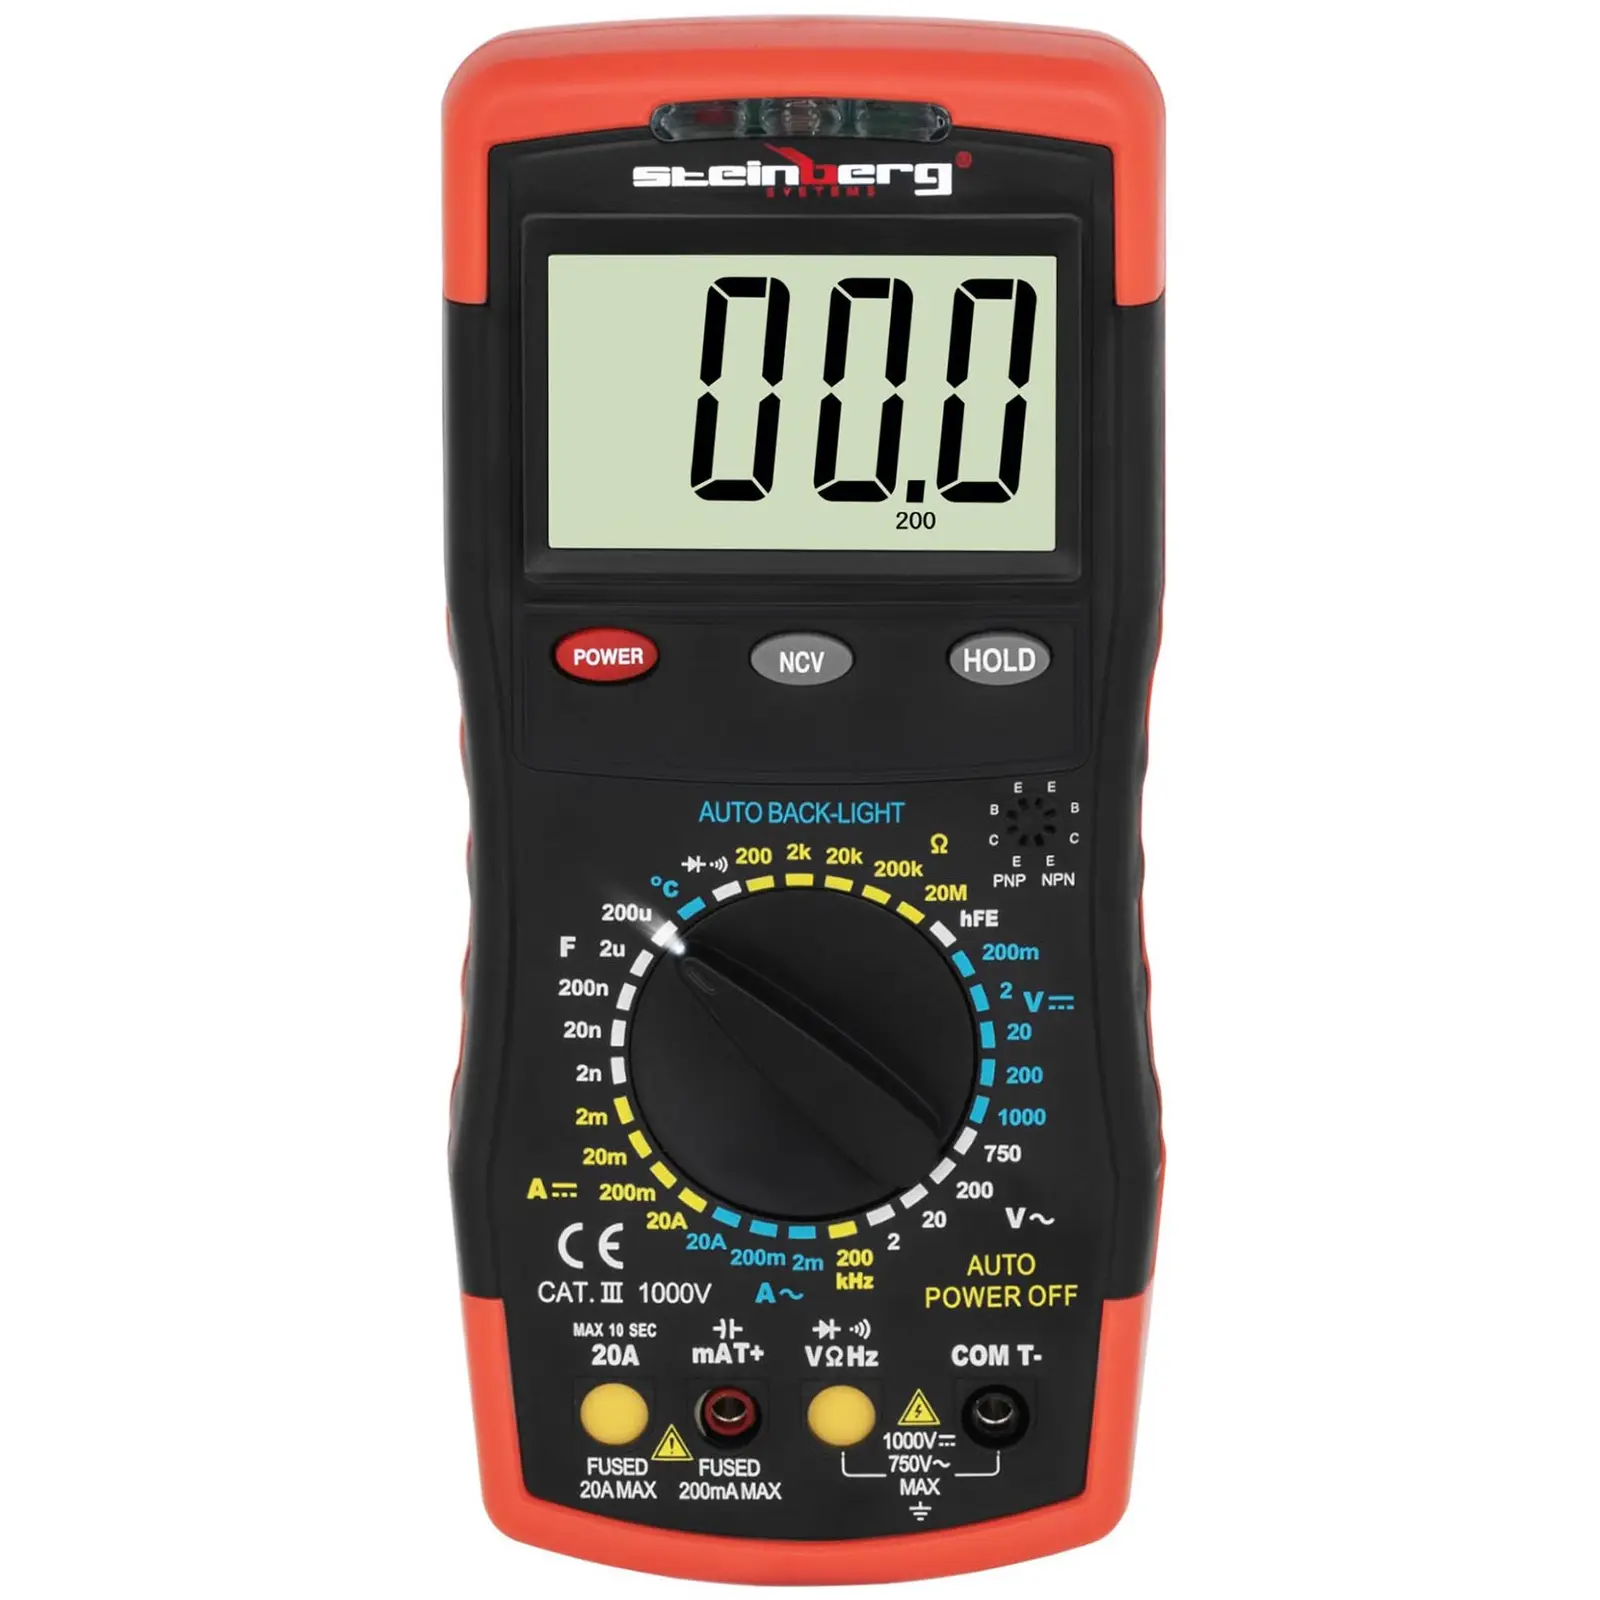 Multimeter - 2.000 Counts - hFE - NCV - Temperaturmessung